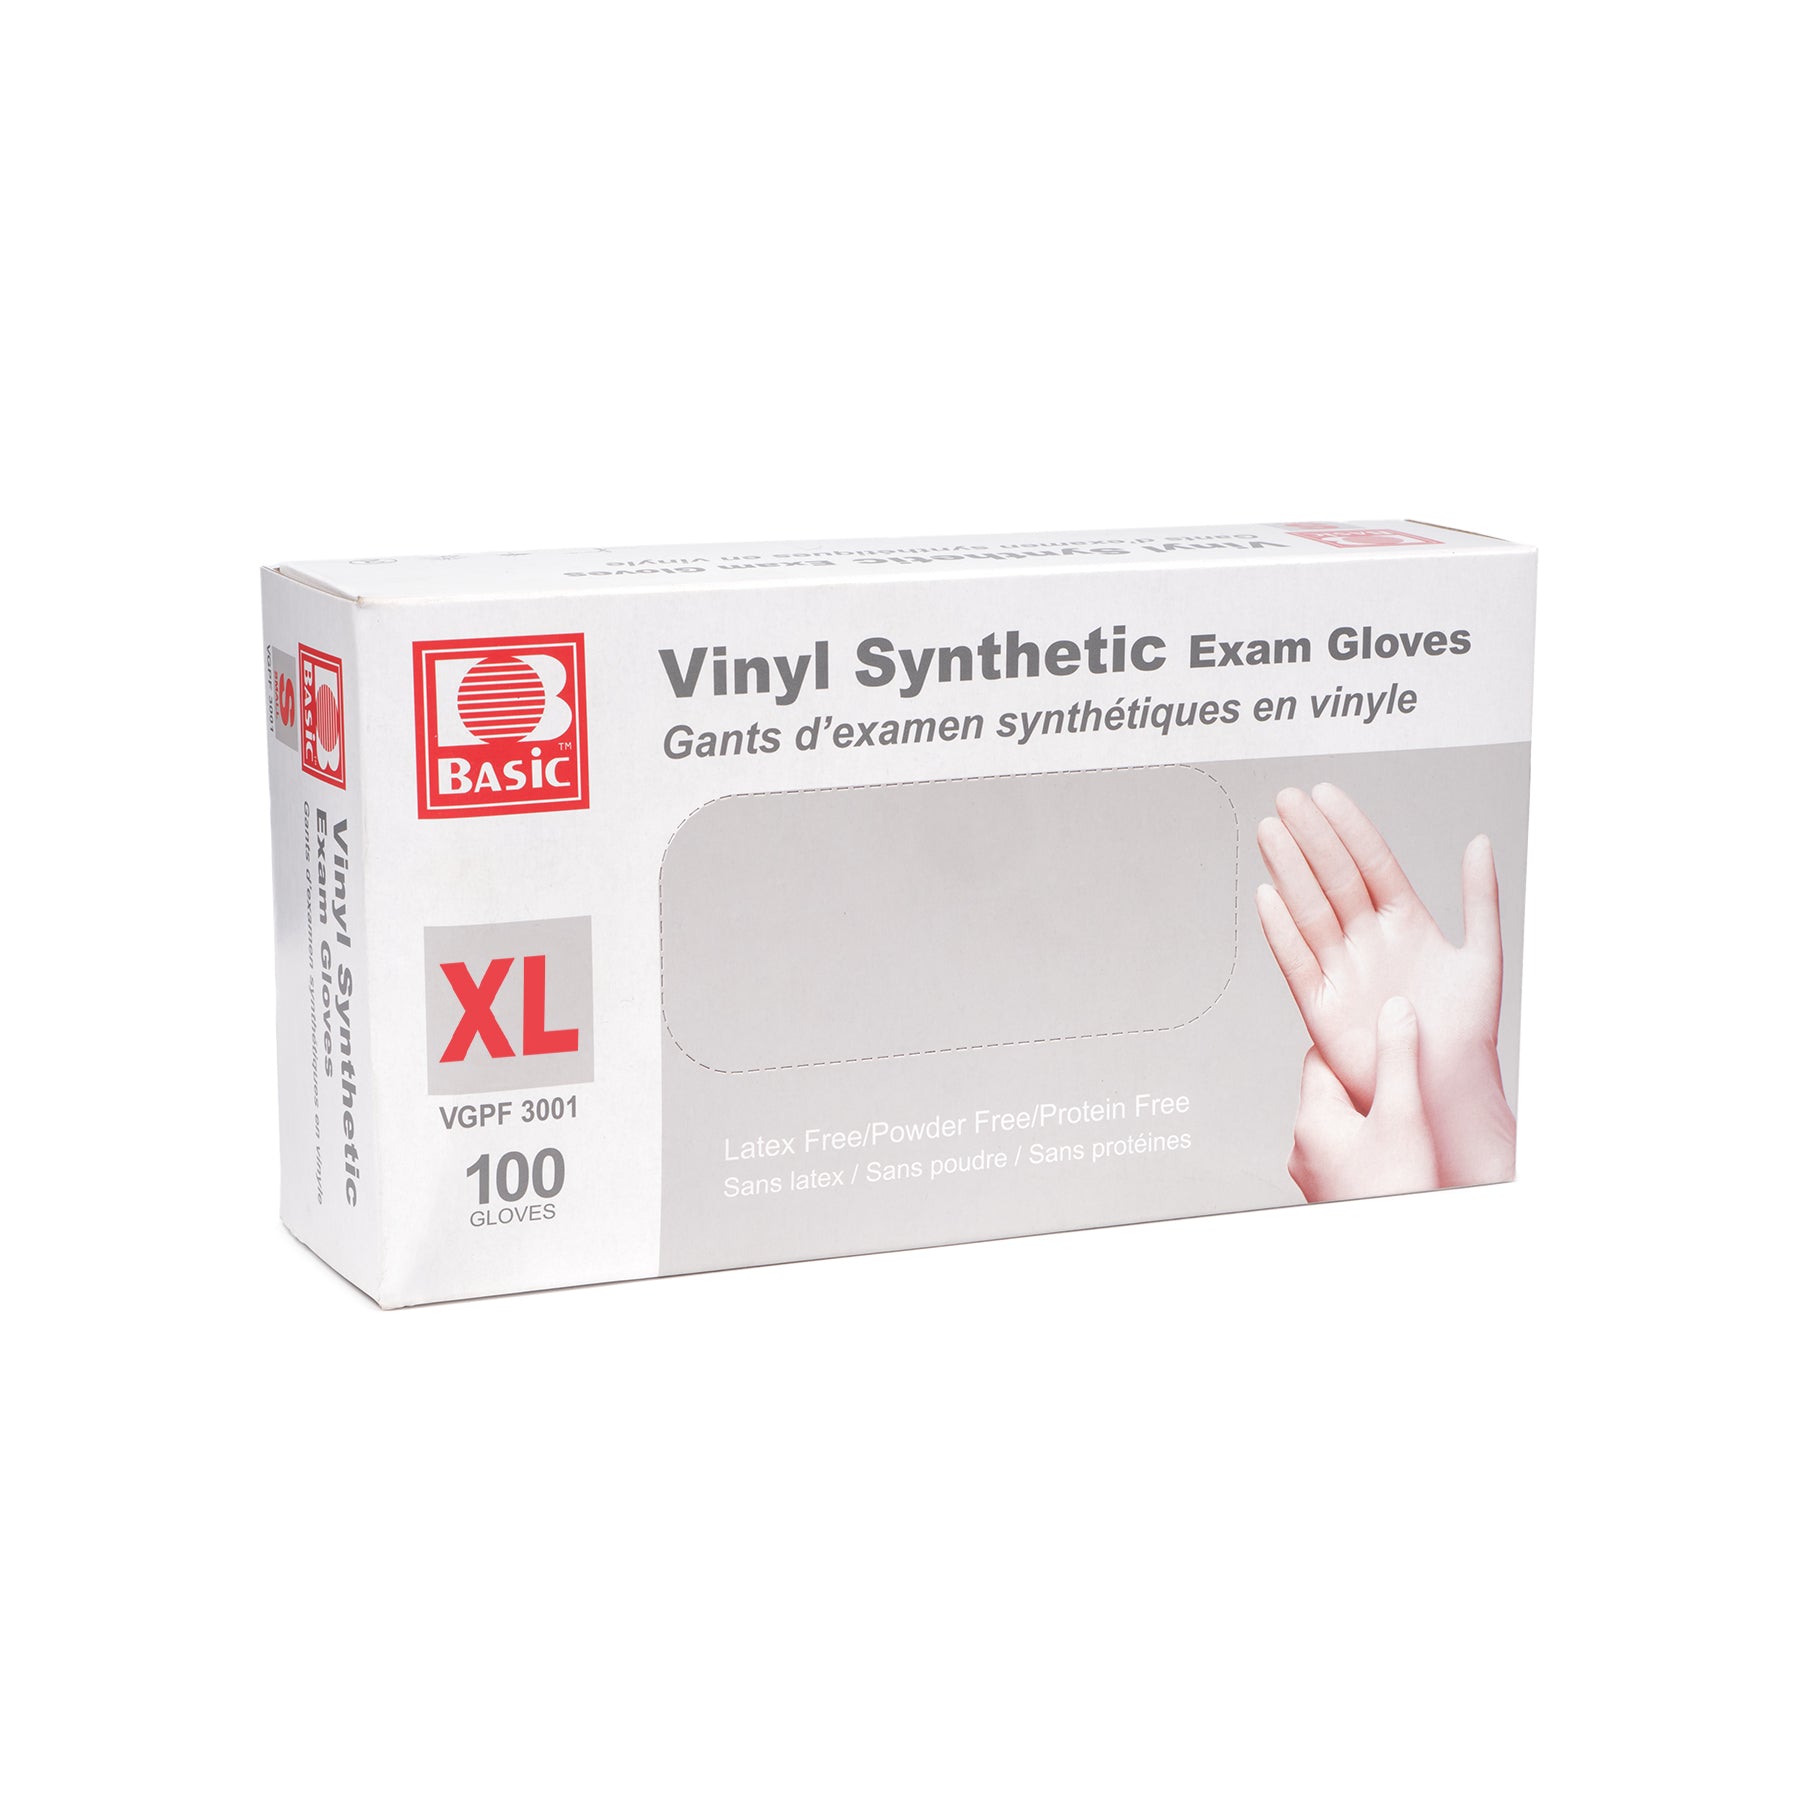 Basic Brand Medical Vinyl Synthetic Powder-Free Examination Gloves (4mil) (Clear)